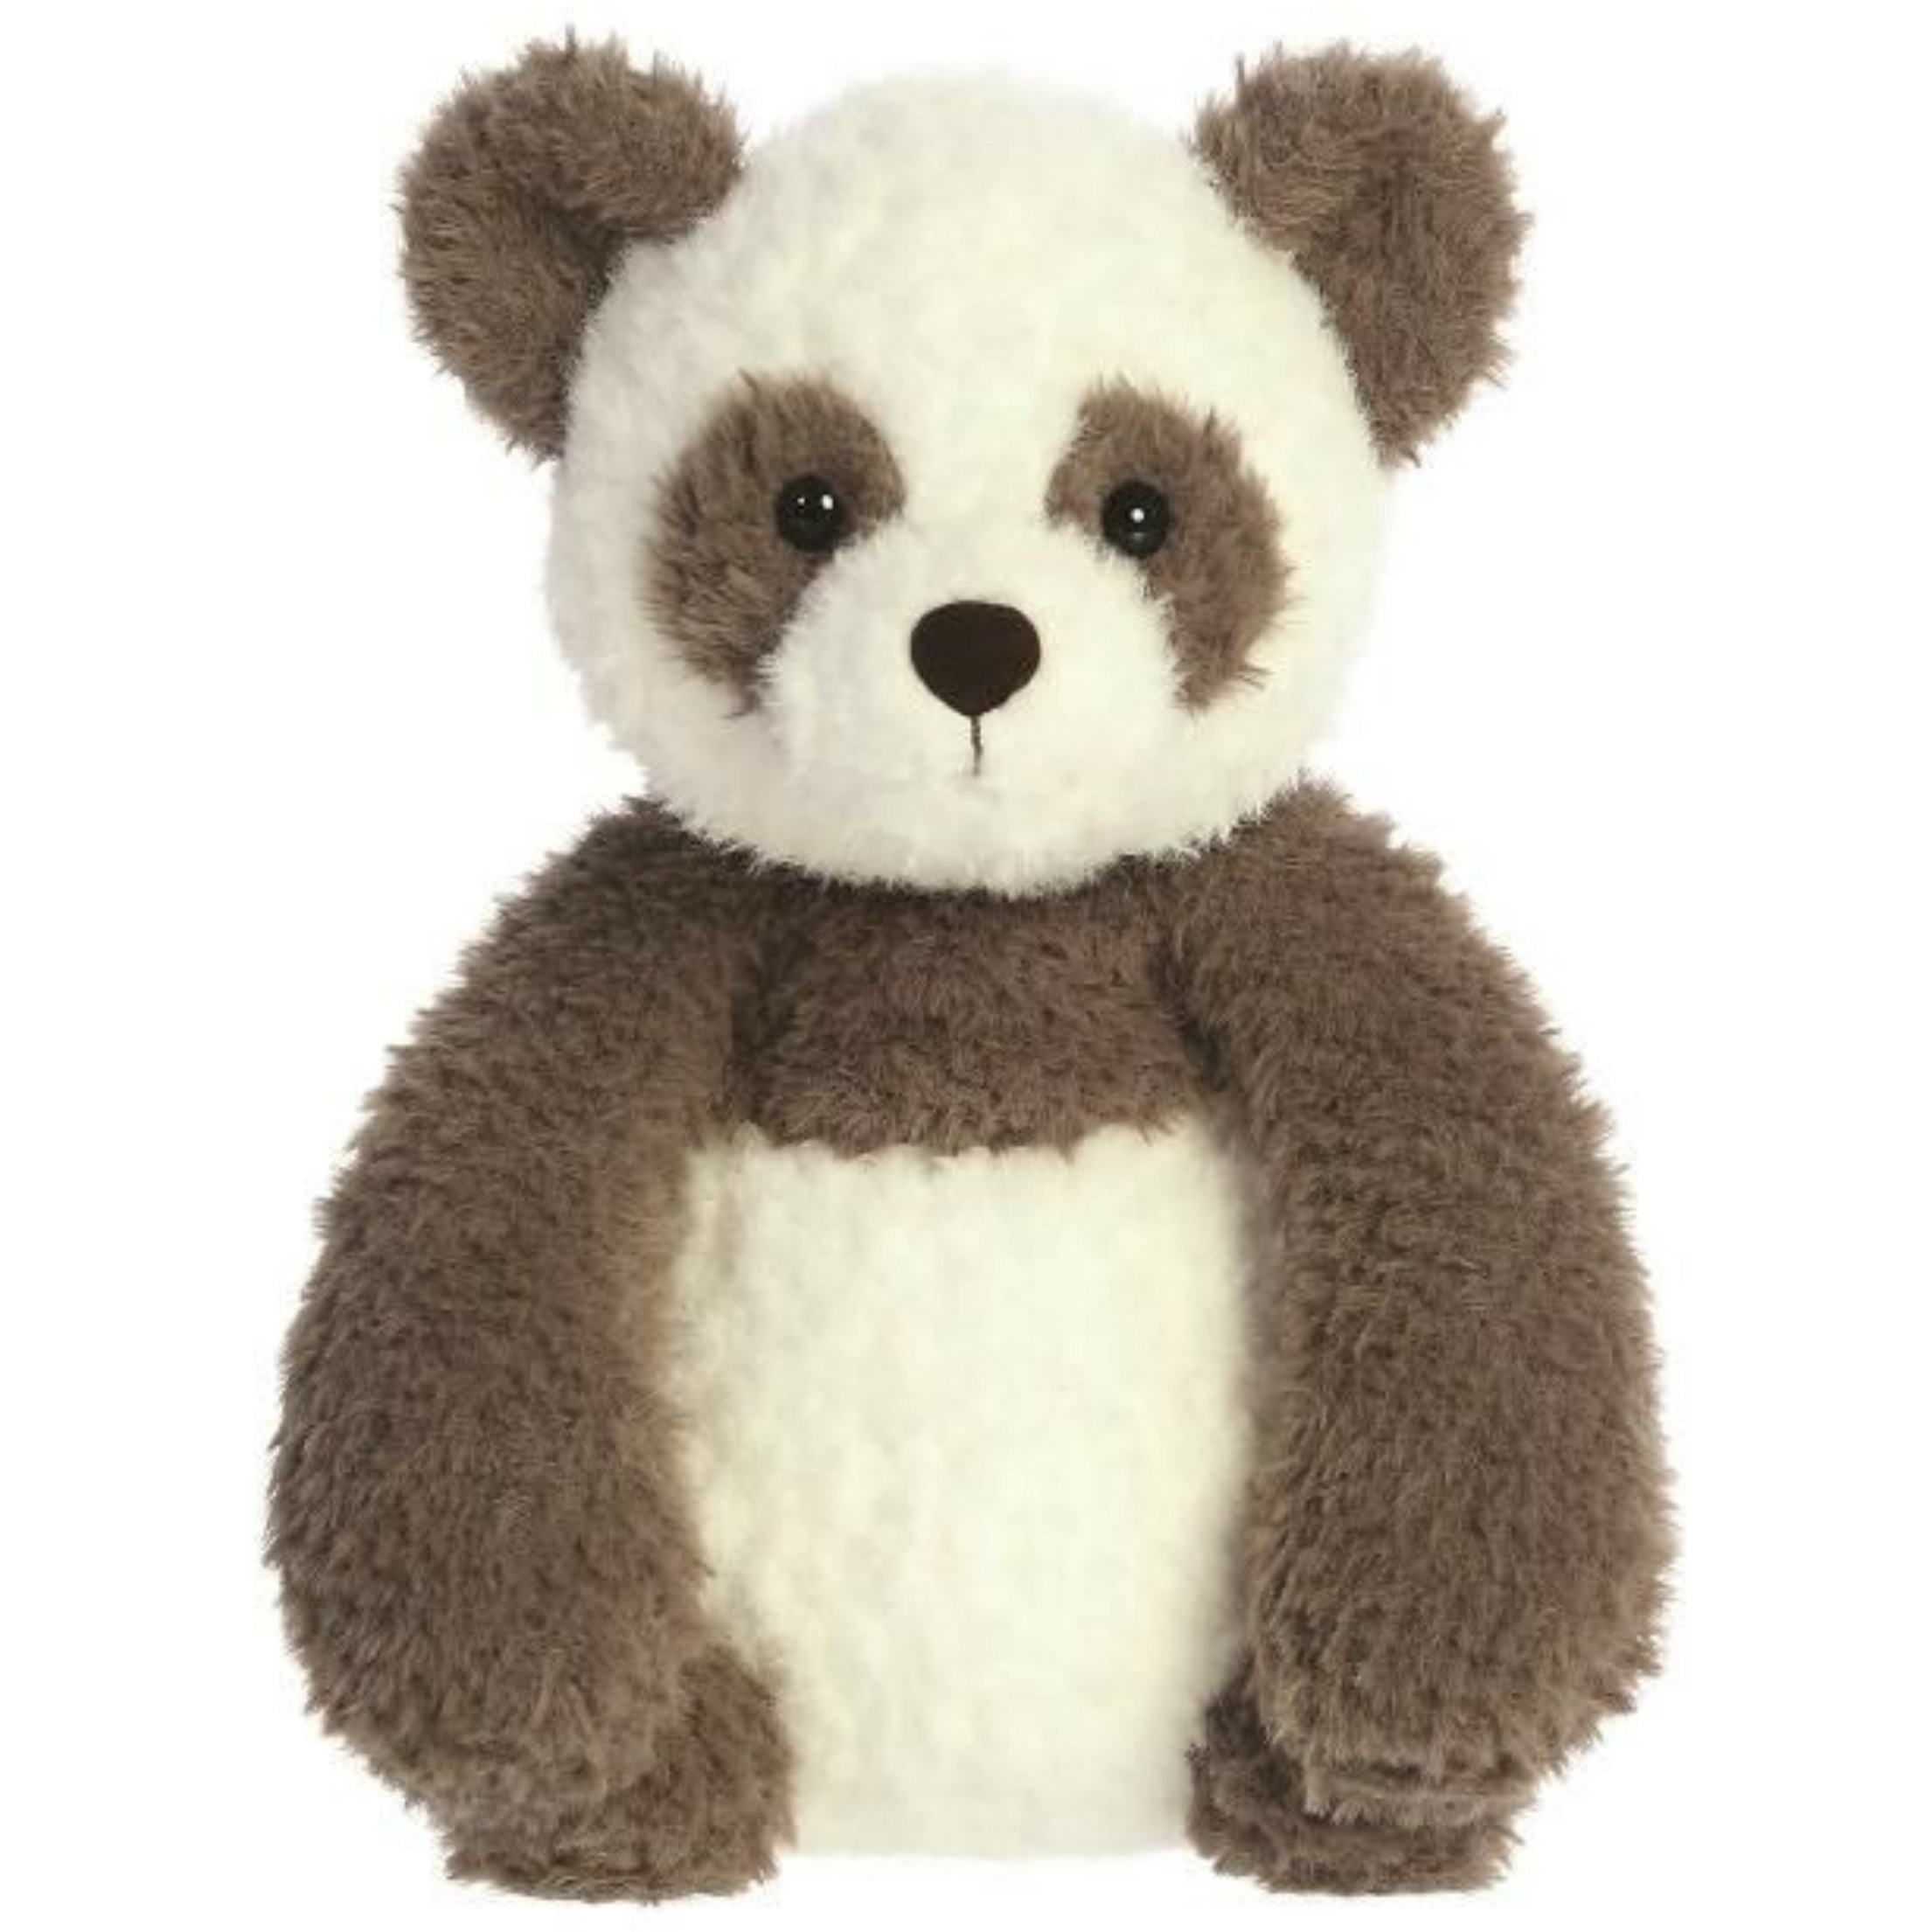 Pluche knuffeldier panda beer grijs-wit 27 cm bosdieren thema